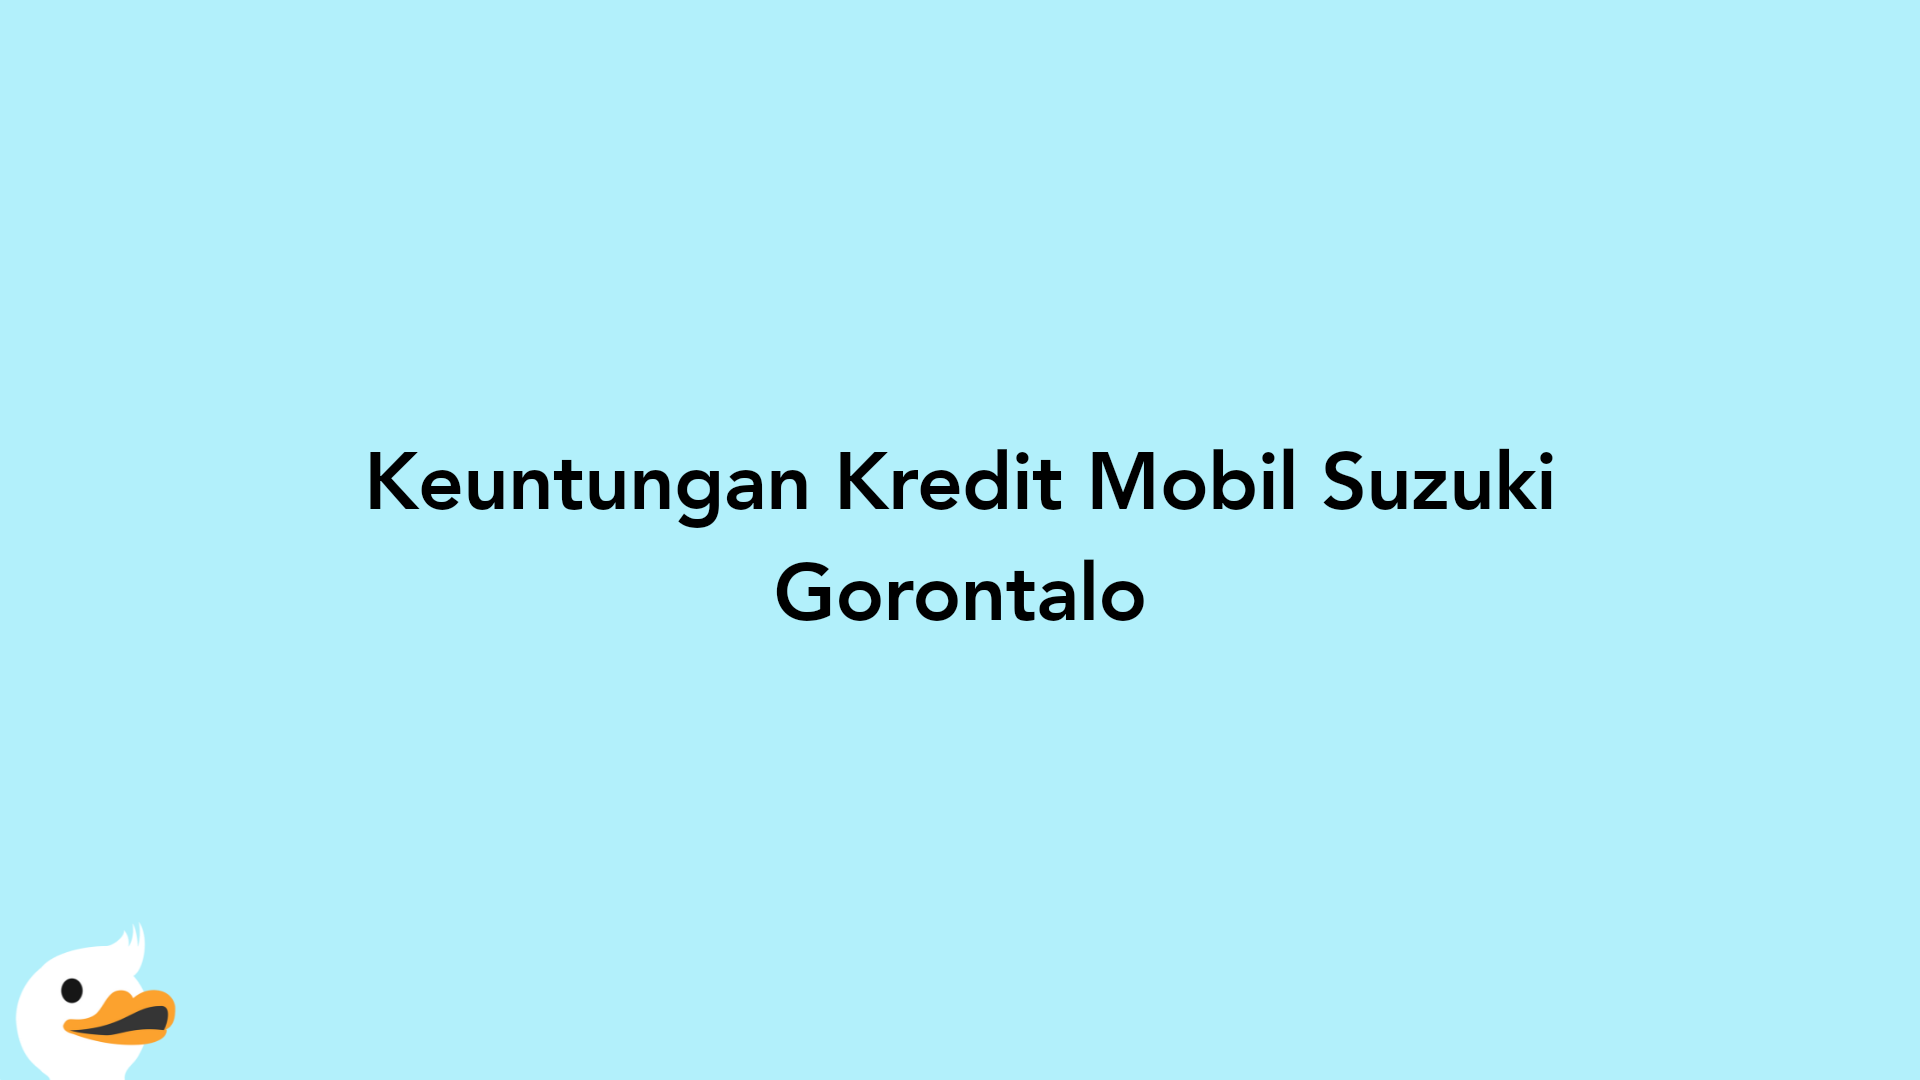 Keuntungan Kredit Mobil Suzuki Gorontalo